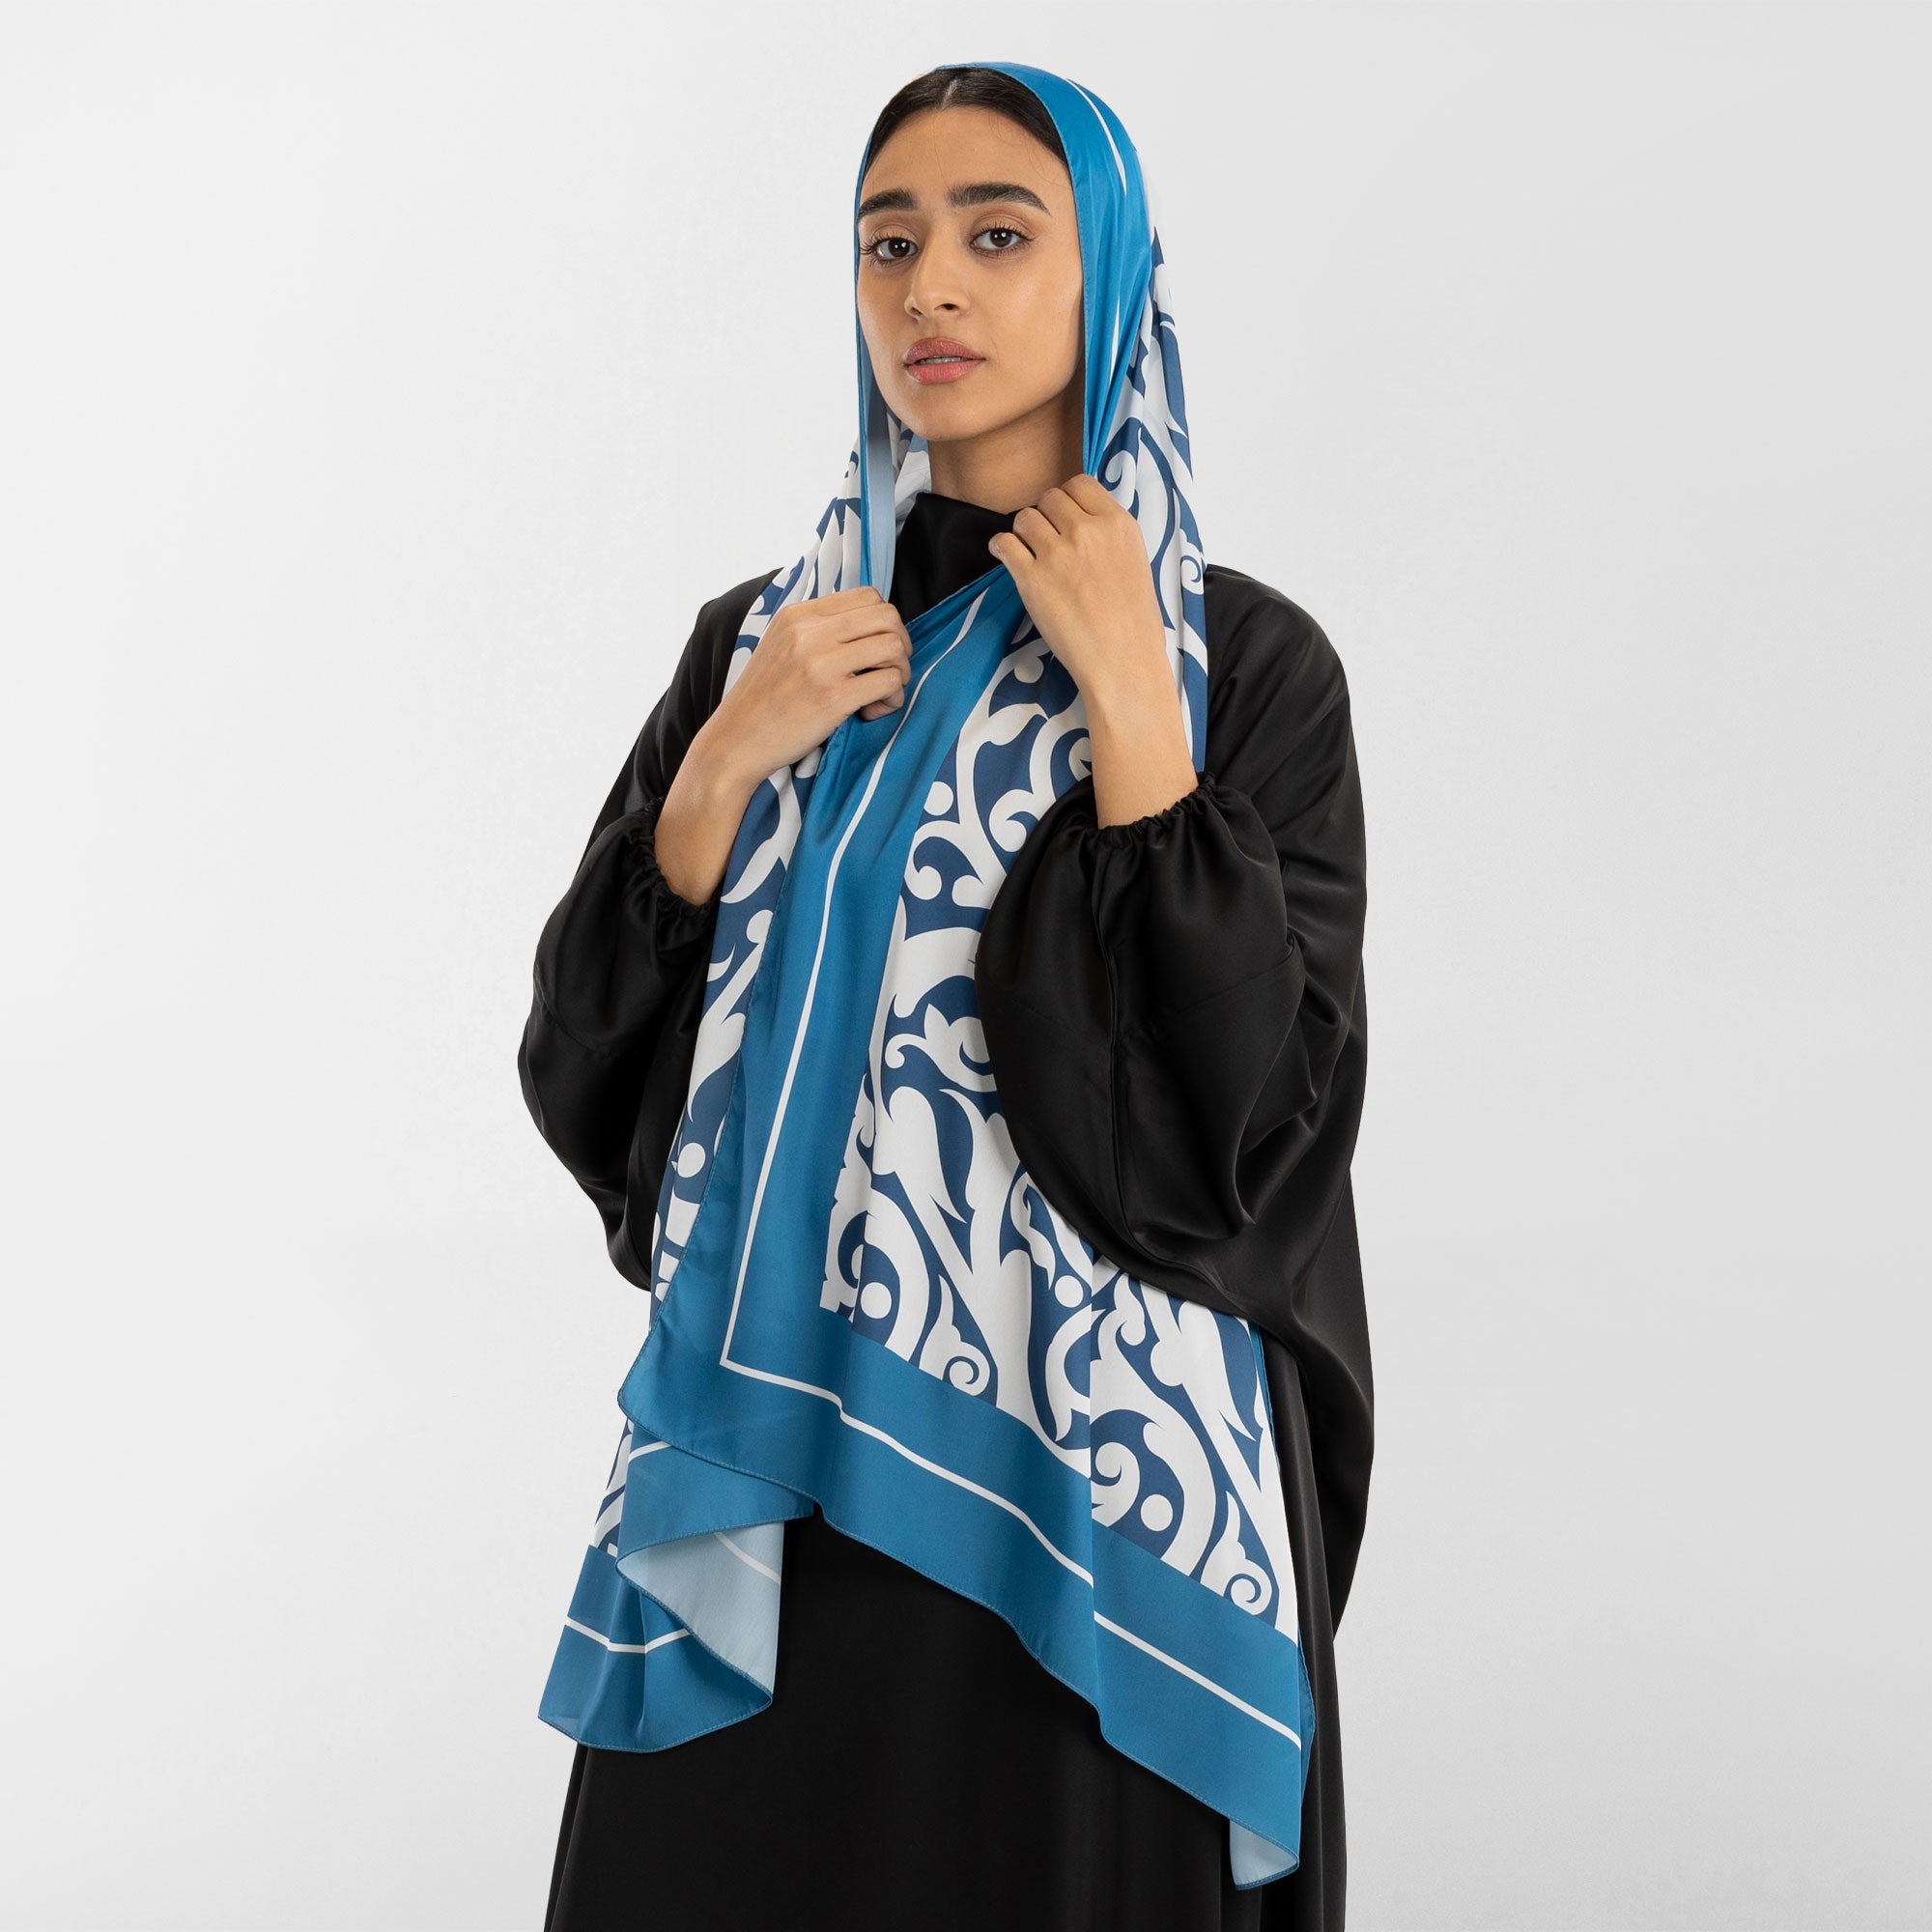 Prayer Wear - Isdal AL-HEDAYA BLUE